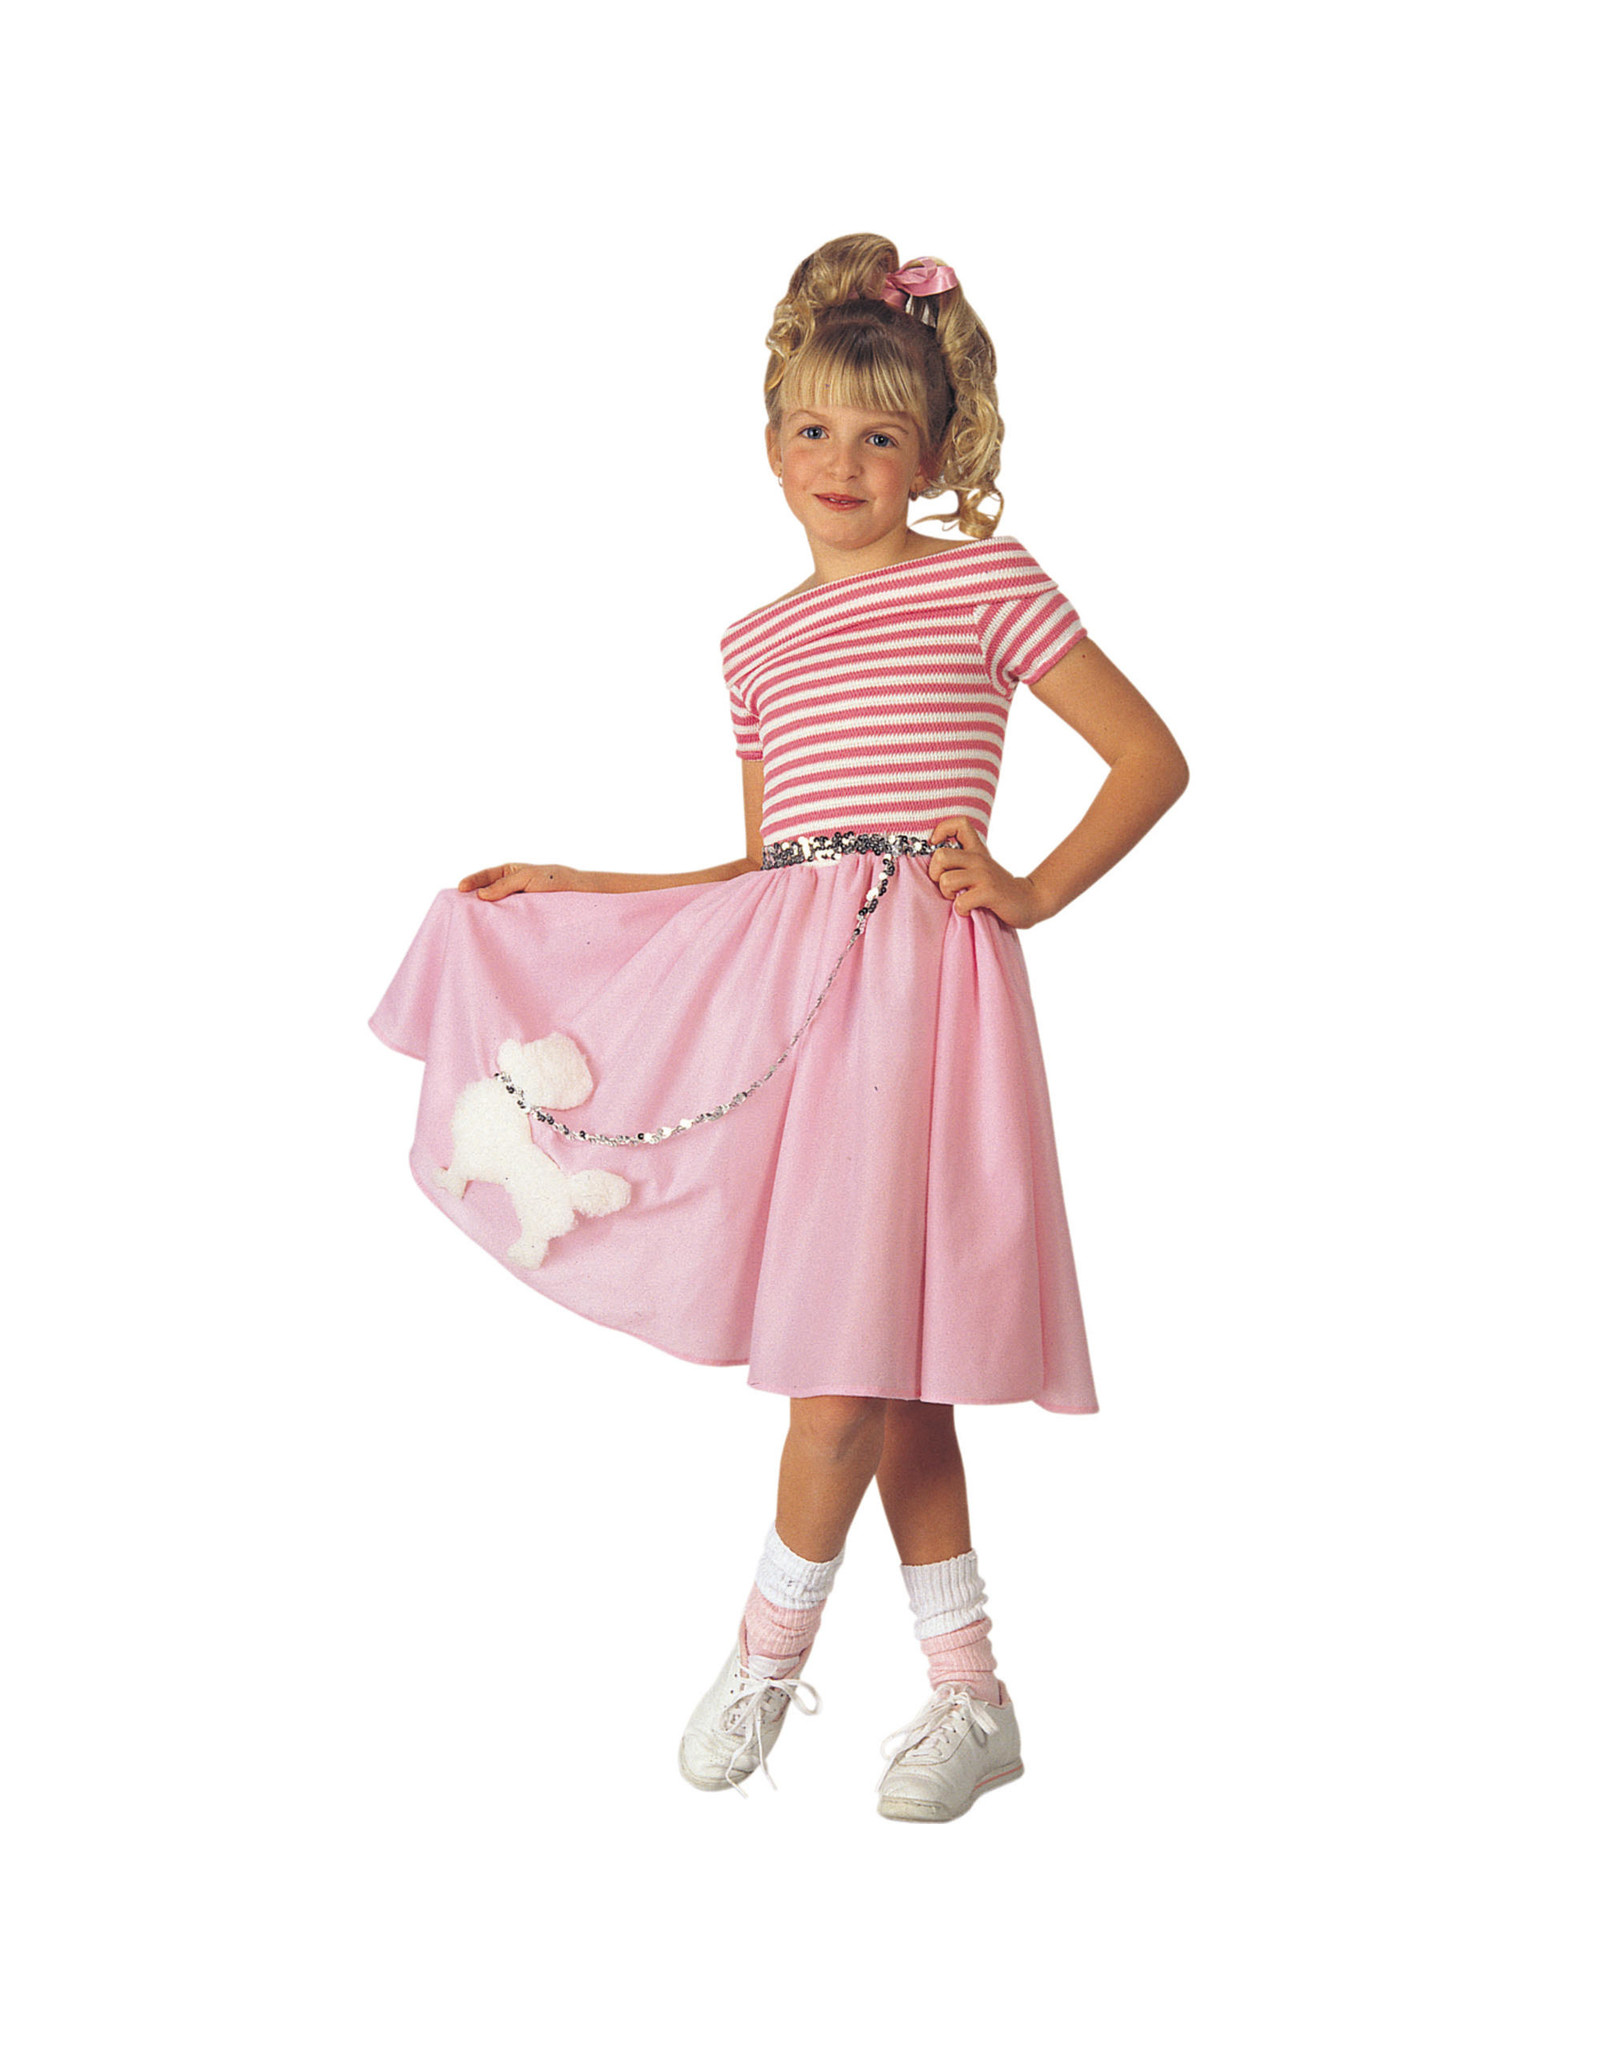 Rubie's Costumes Girls Nifty Fifties Halloween Costume Skirt, Pink, S - Small